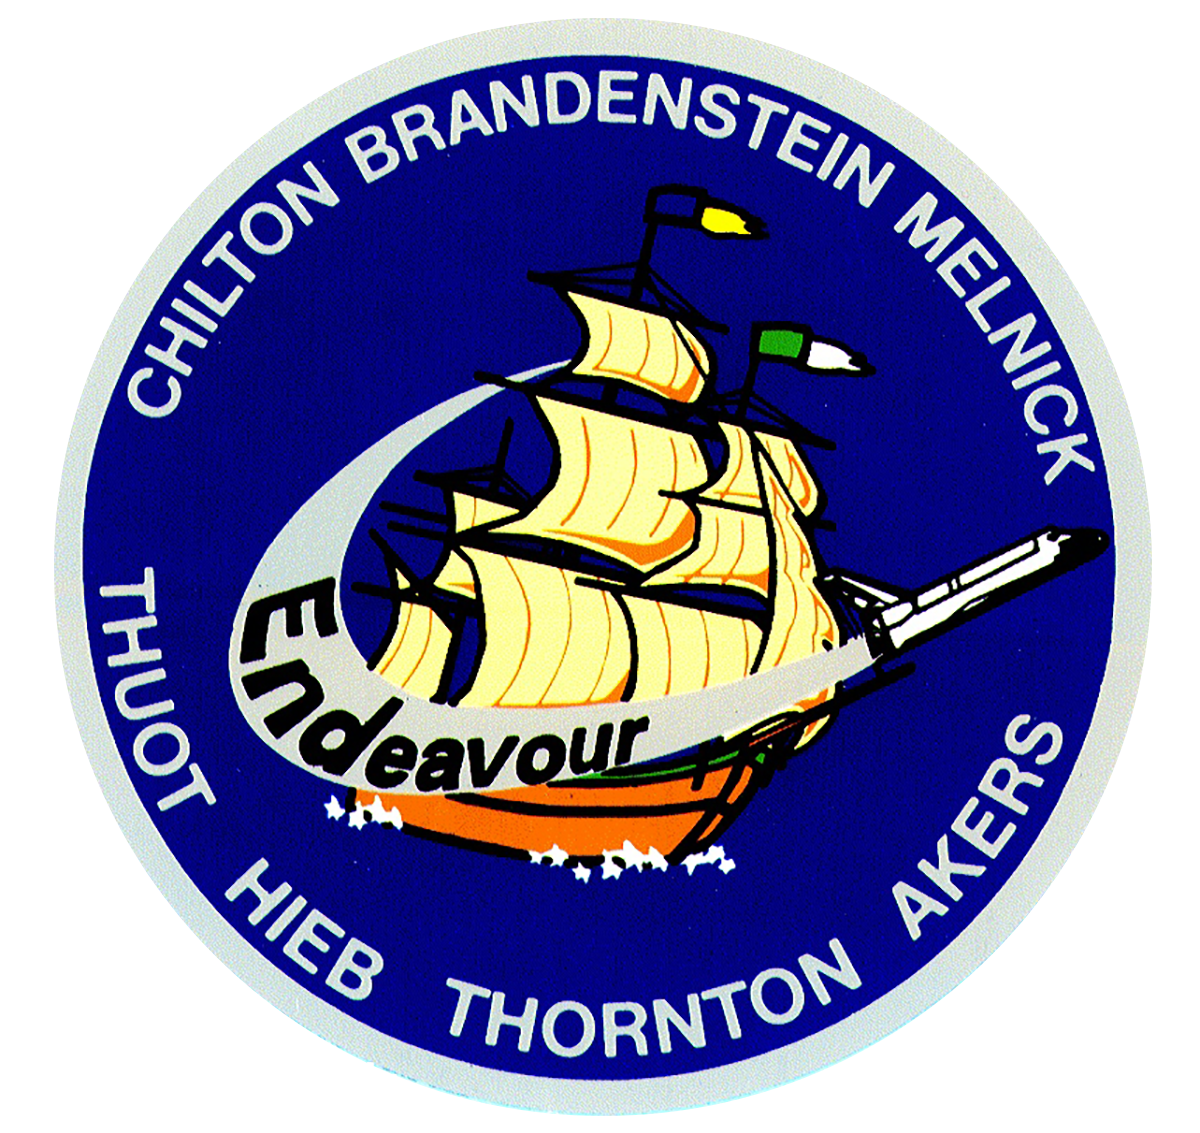 STS-49 (Endeavour)